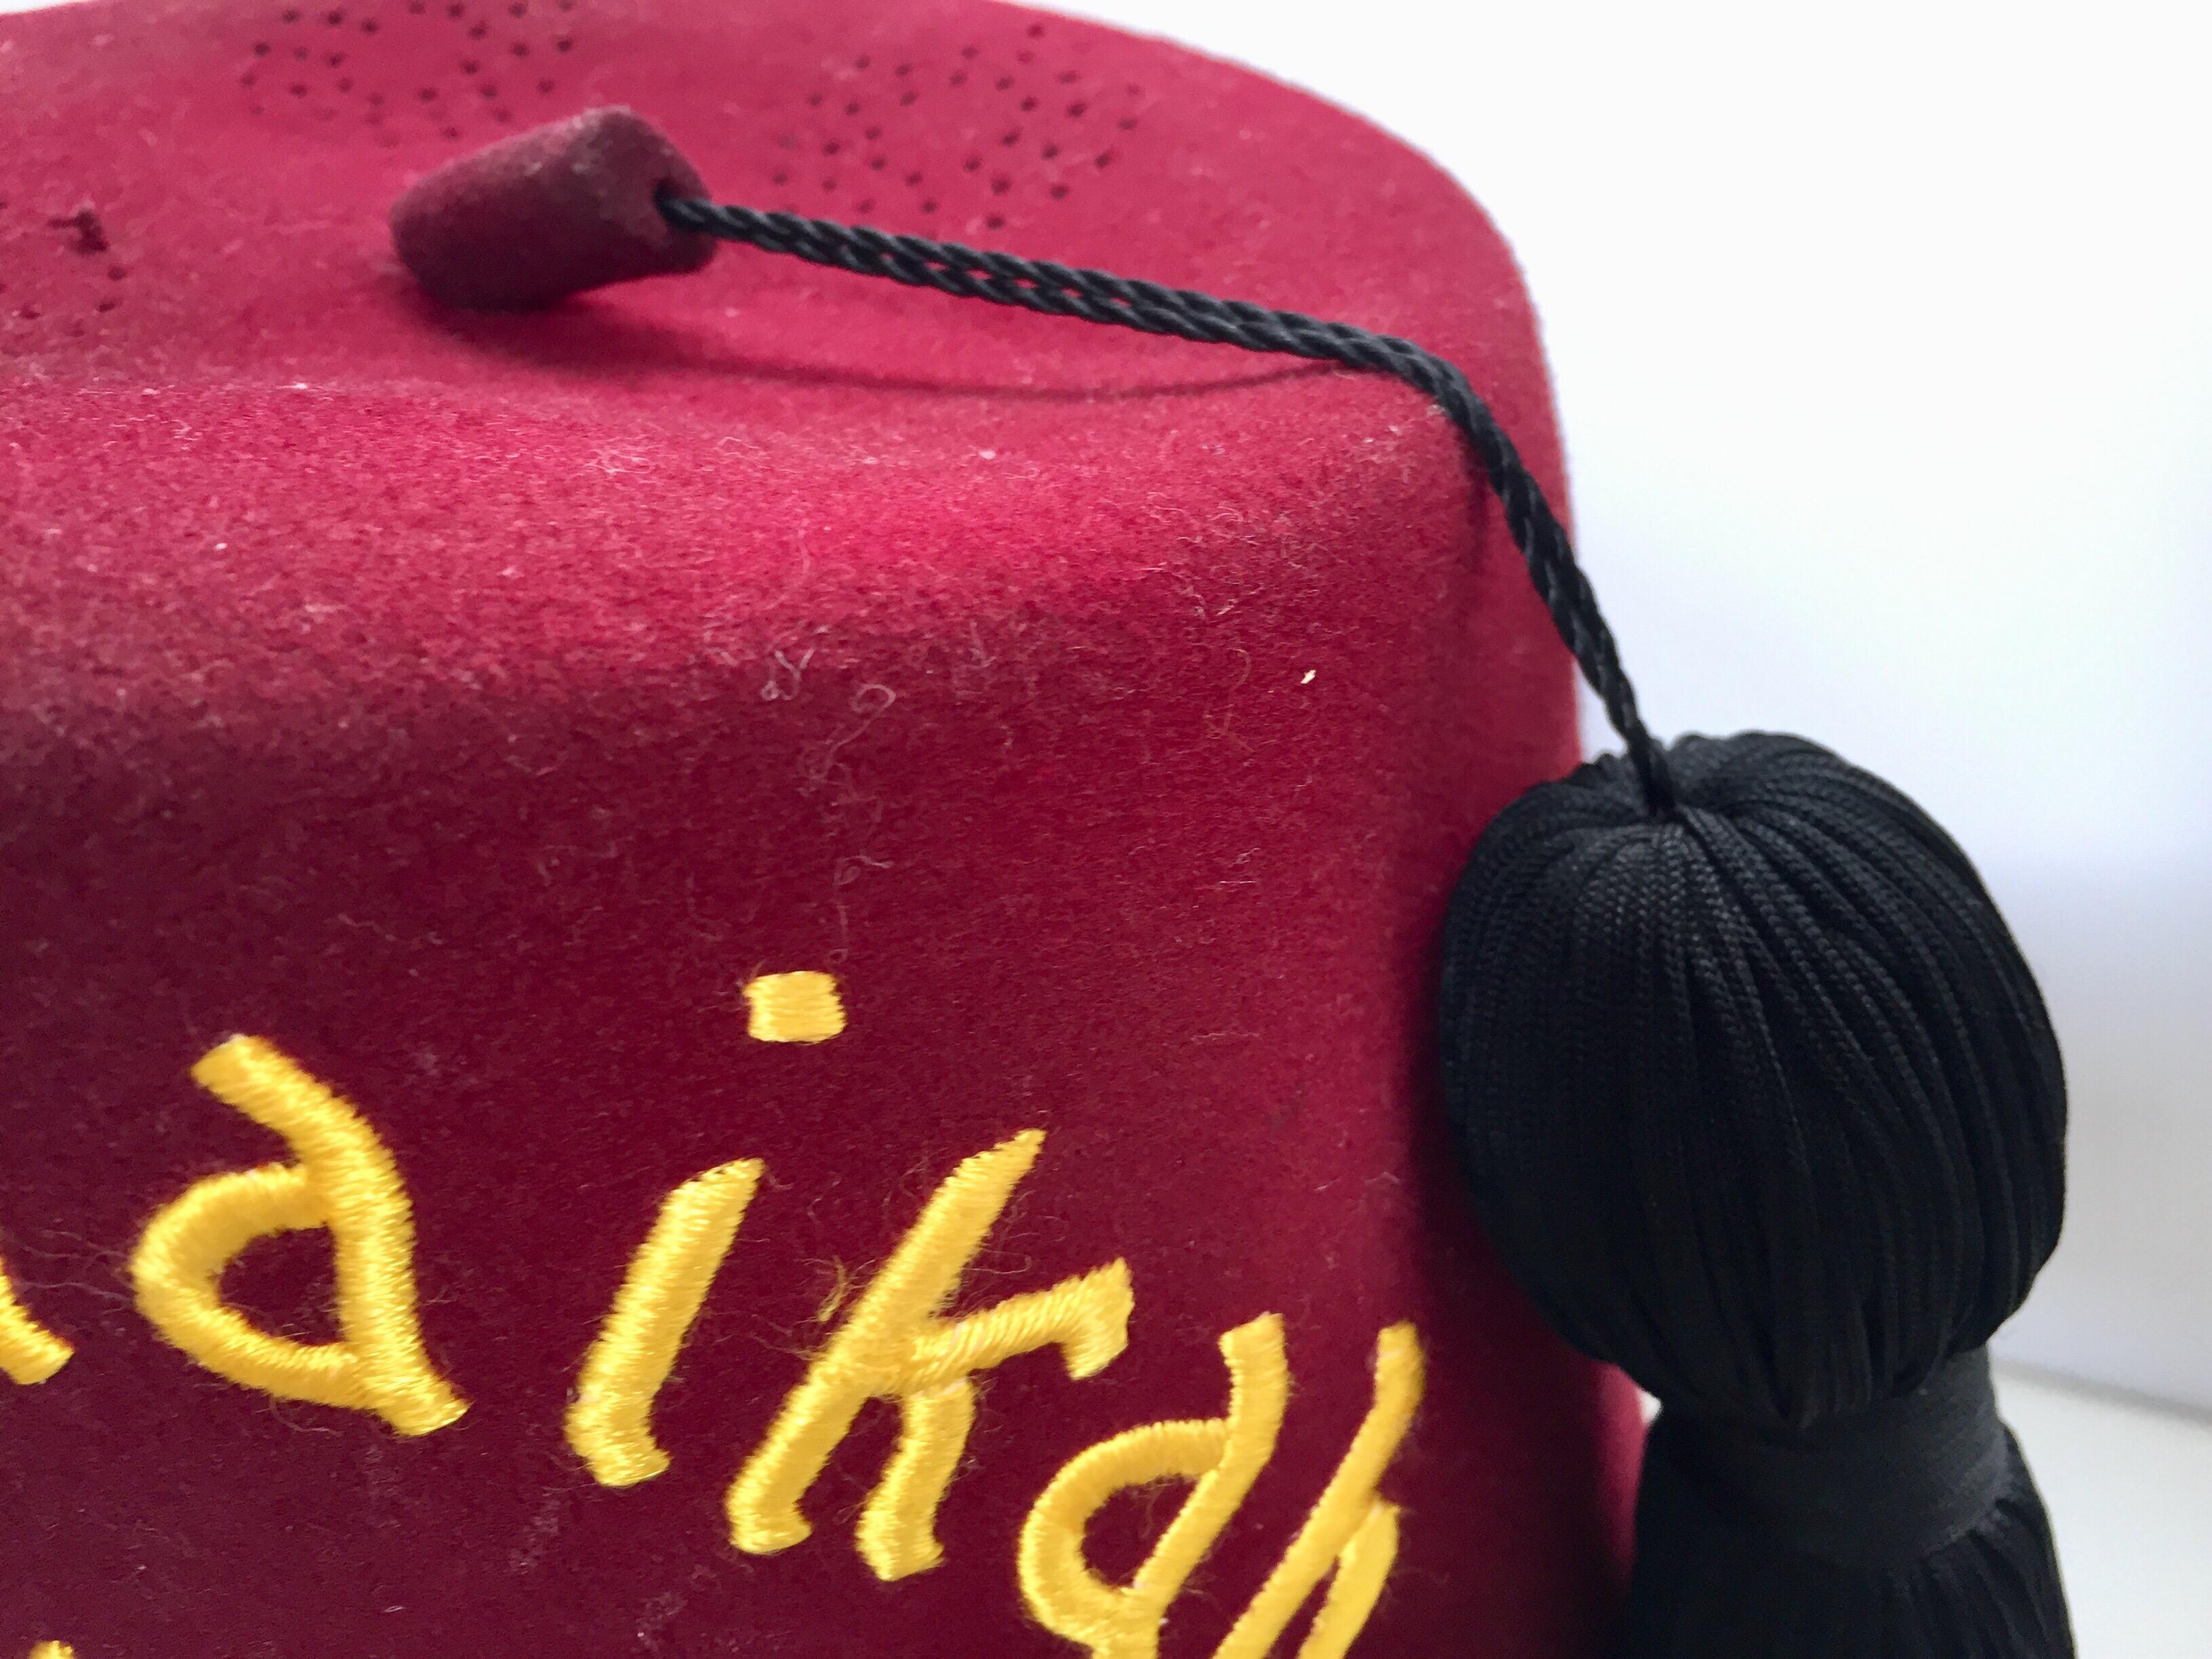 AL Malaikah vintage Masonic Shriner iconic burgundy wool Fez hat.
Al Malaikah, legion of Honor vintage fez hat from the Los Angeles Al Malaikah Shriner masonic lodge.
This vintage Al Malaikah Shriner's fez in burgundy felt wool with gold